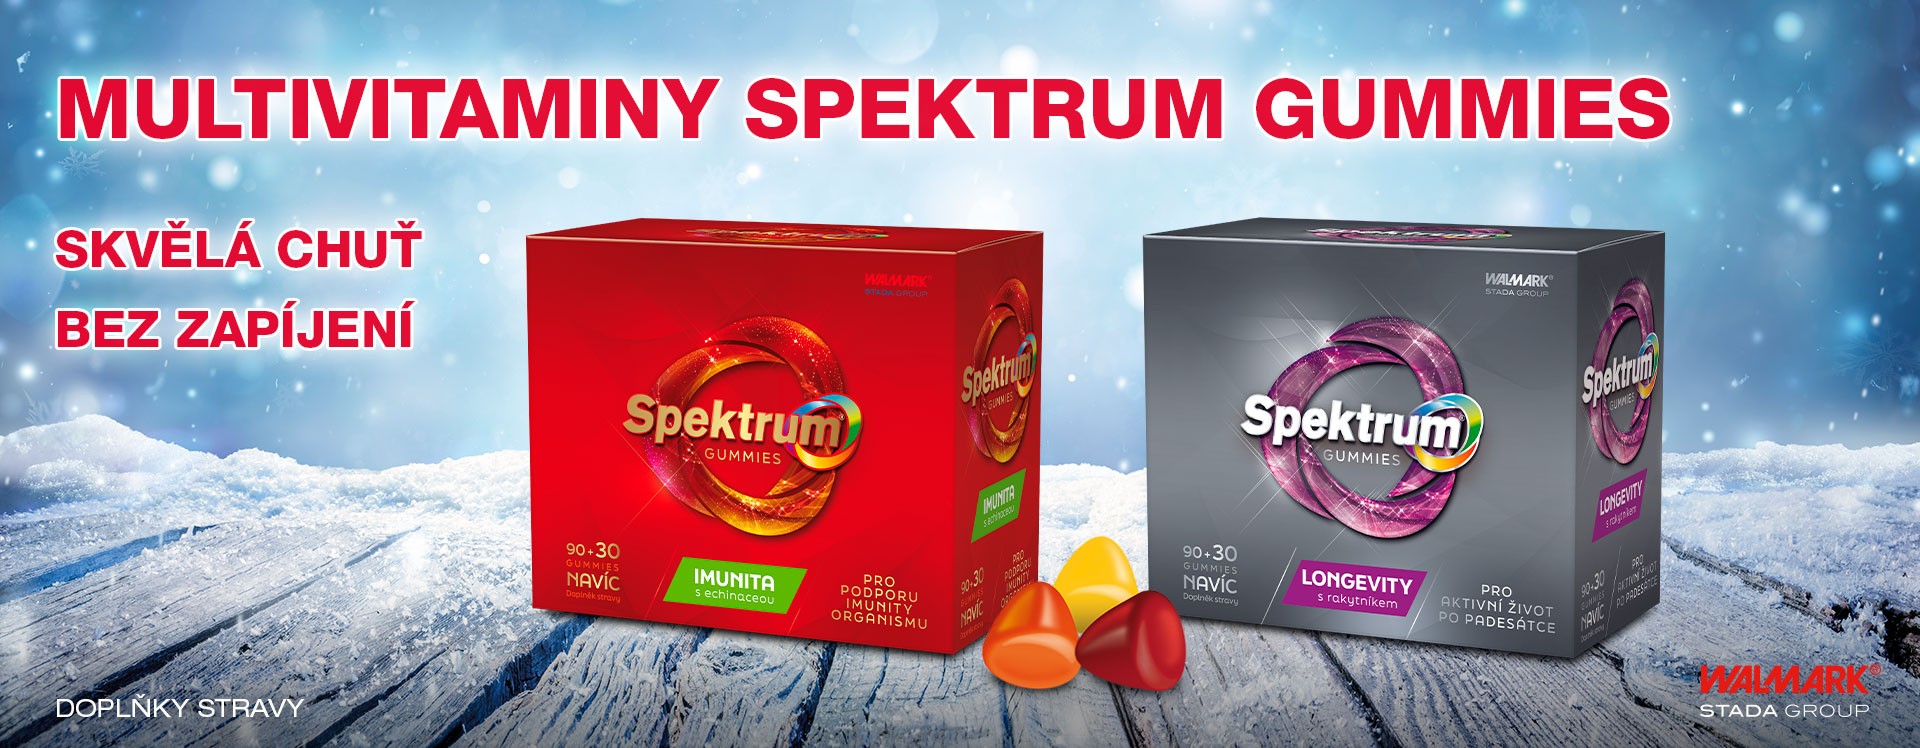 Onlinelekarna.cz | Spektrum Gummies